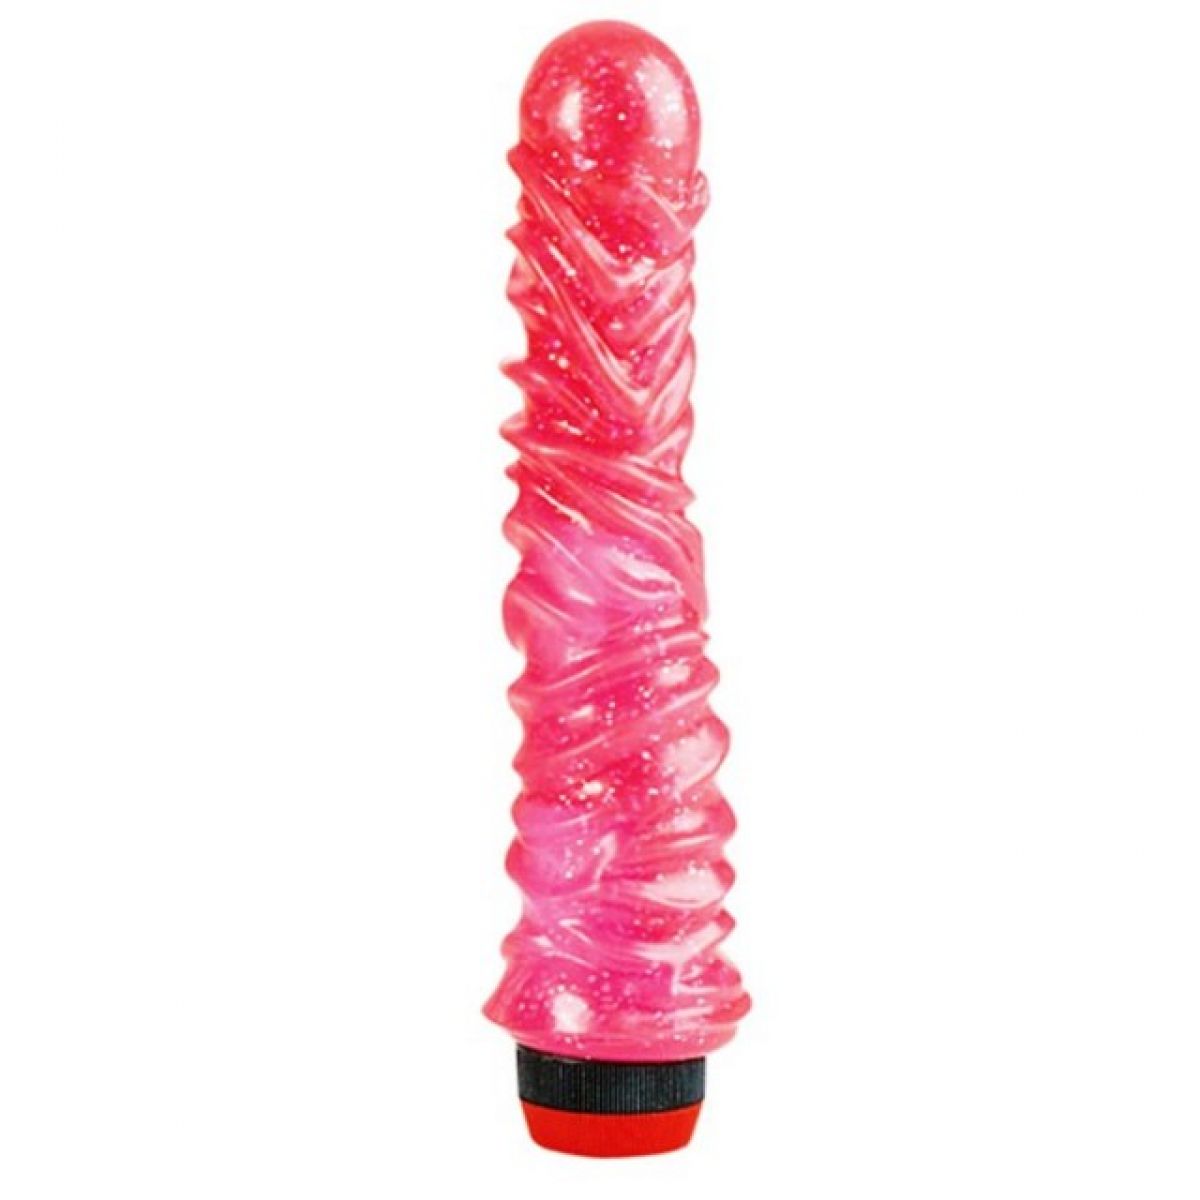 Розовый вибратор с блестками Hot Pinks Twister 8in